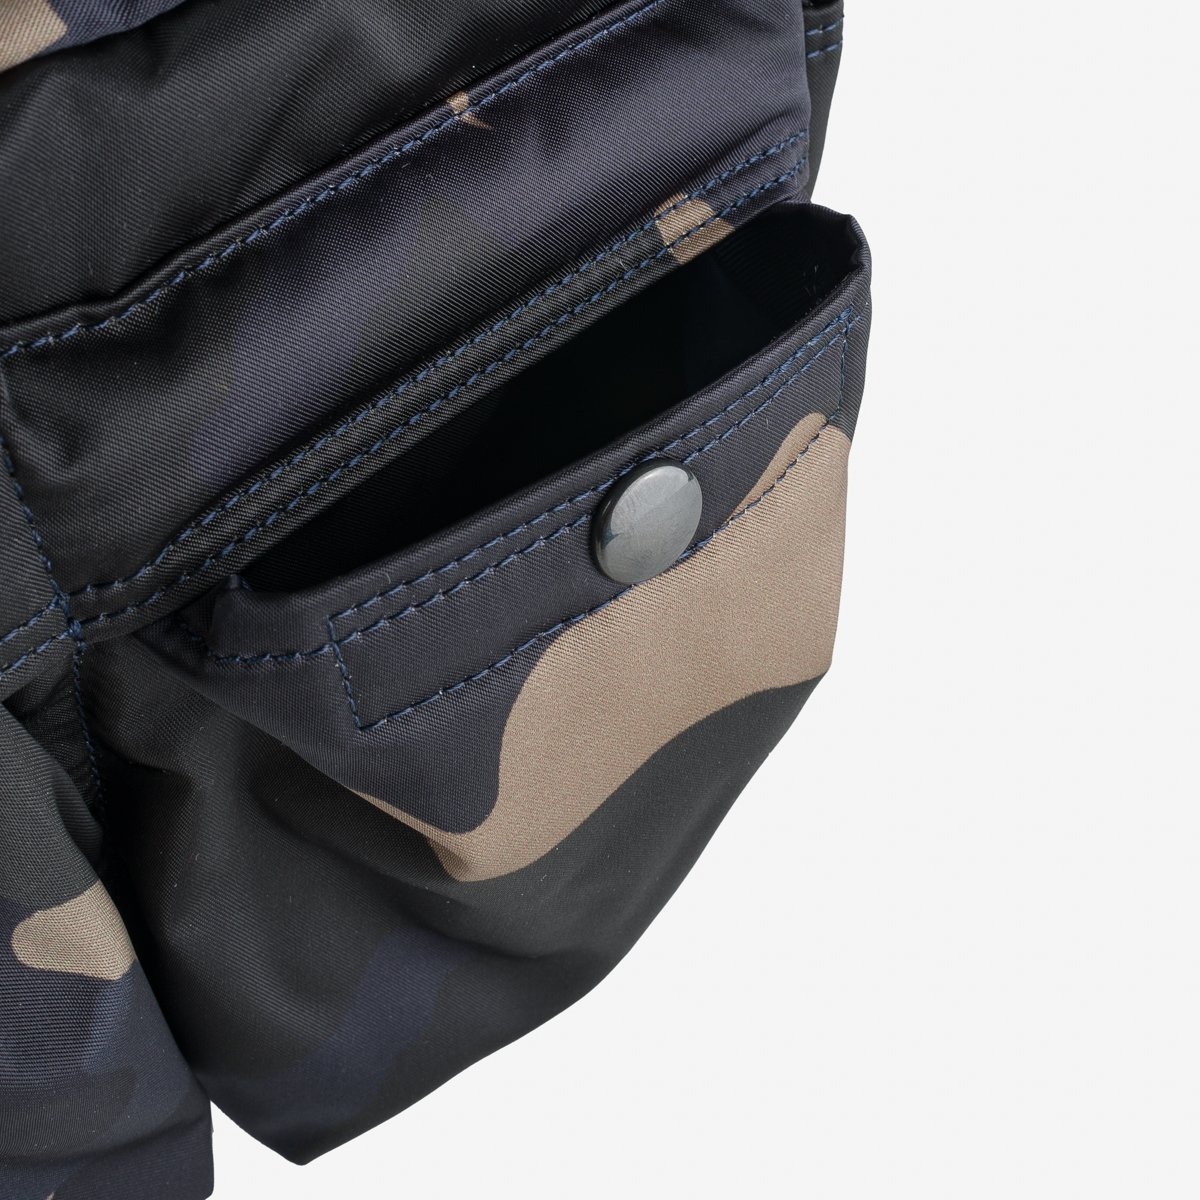 POR-SHLDR-CAM Porter - Yoshida & Co. - Counter Shade Shoulder Bag - Camo - 11